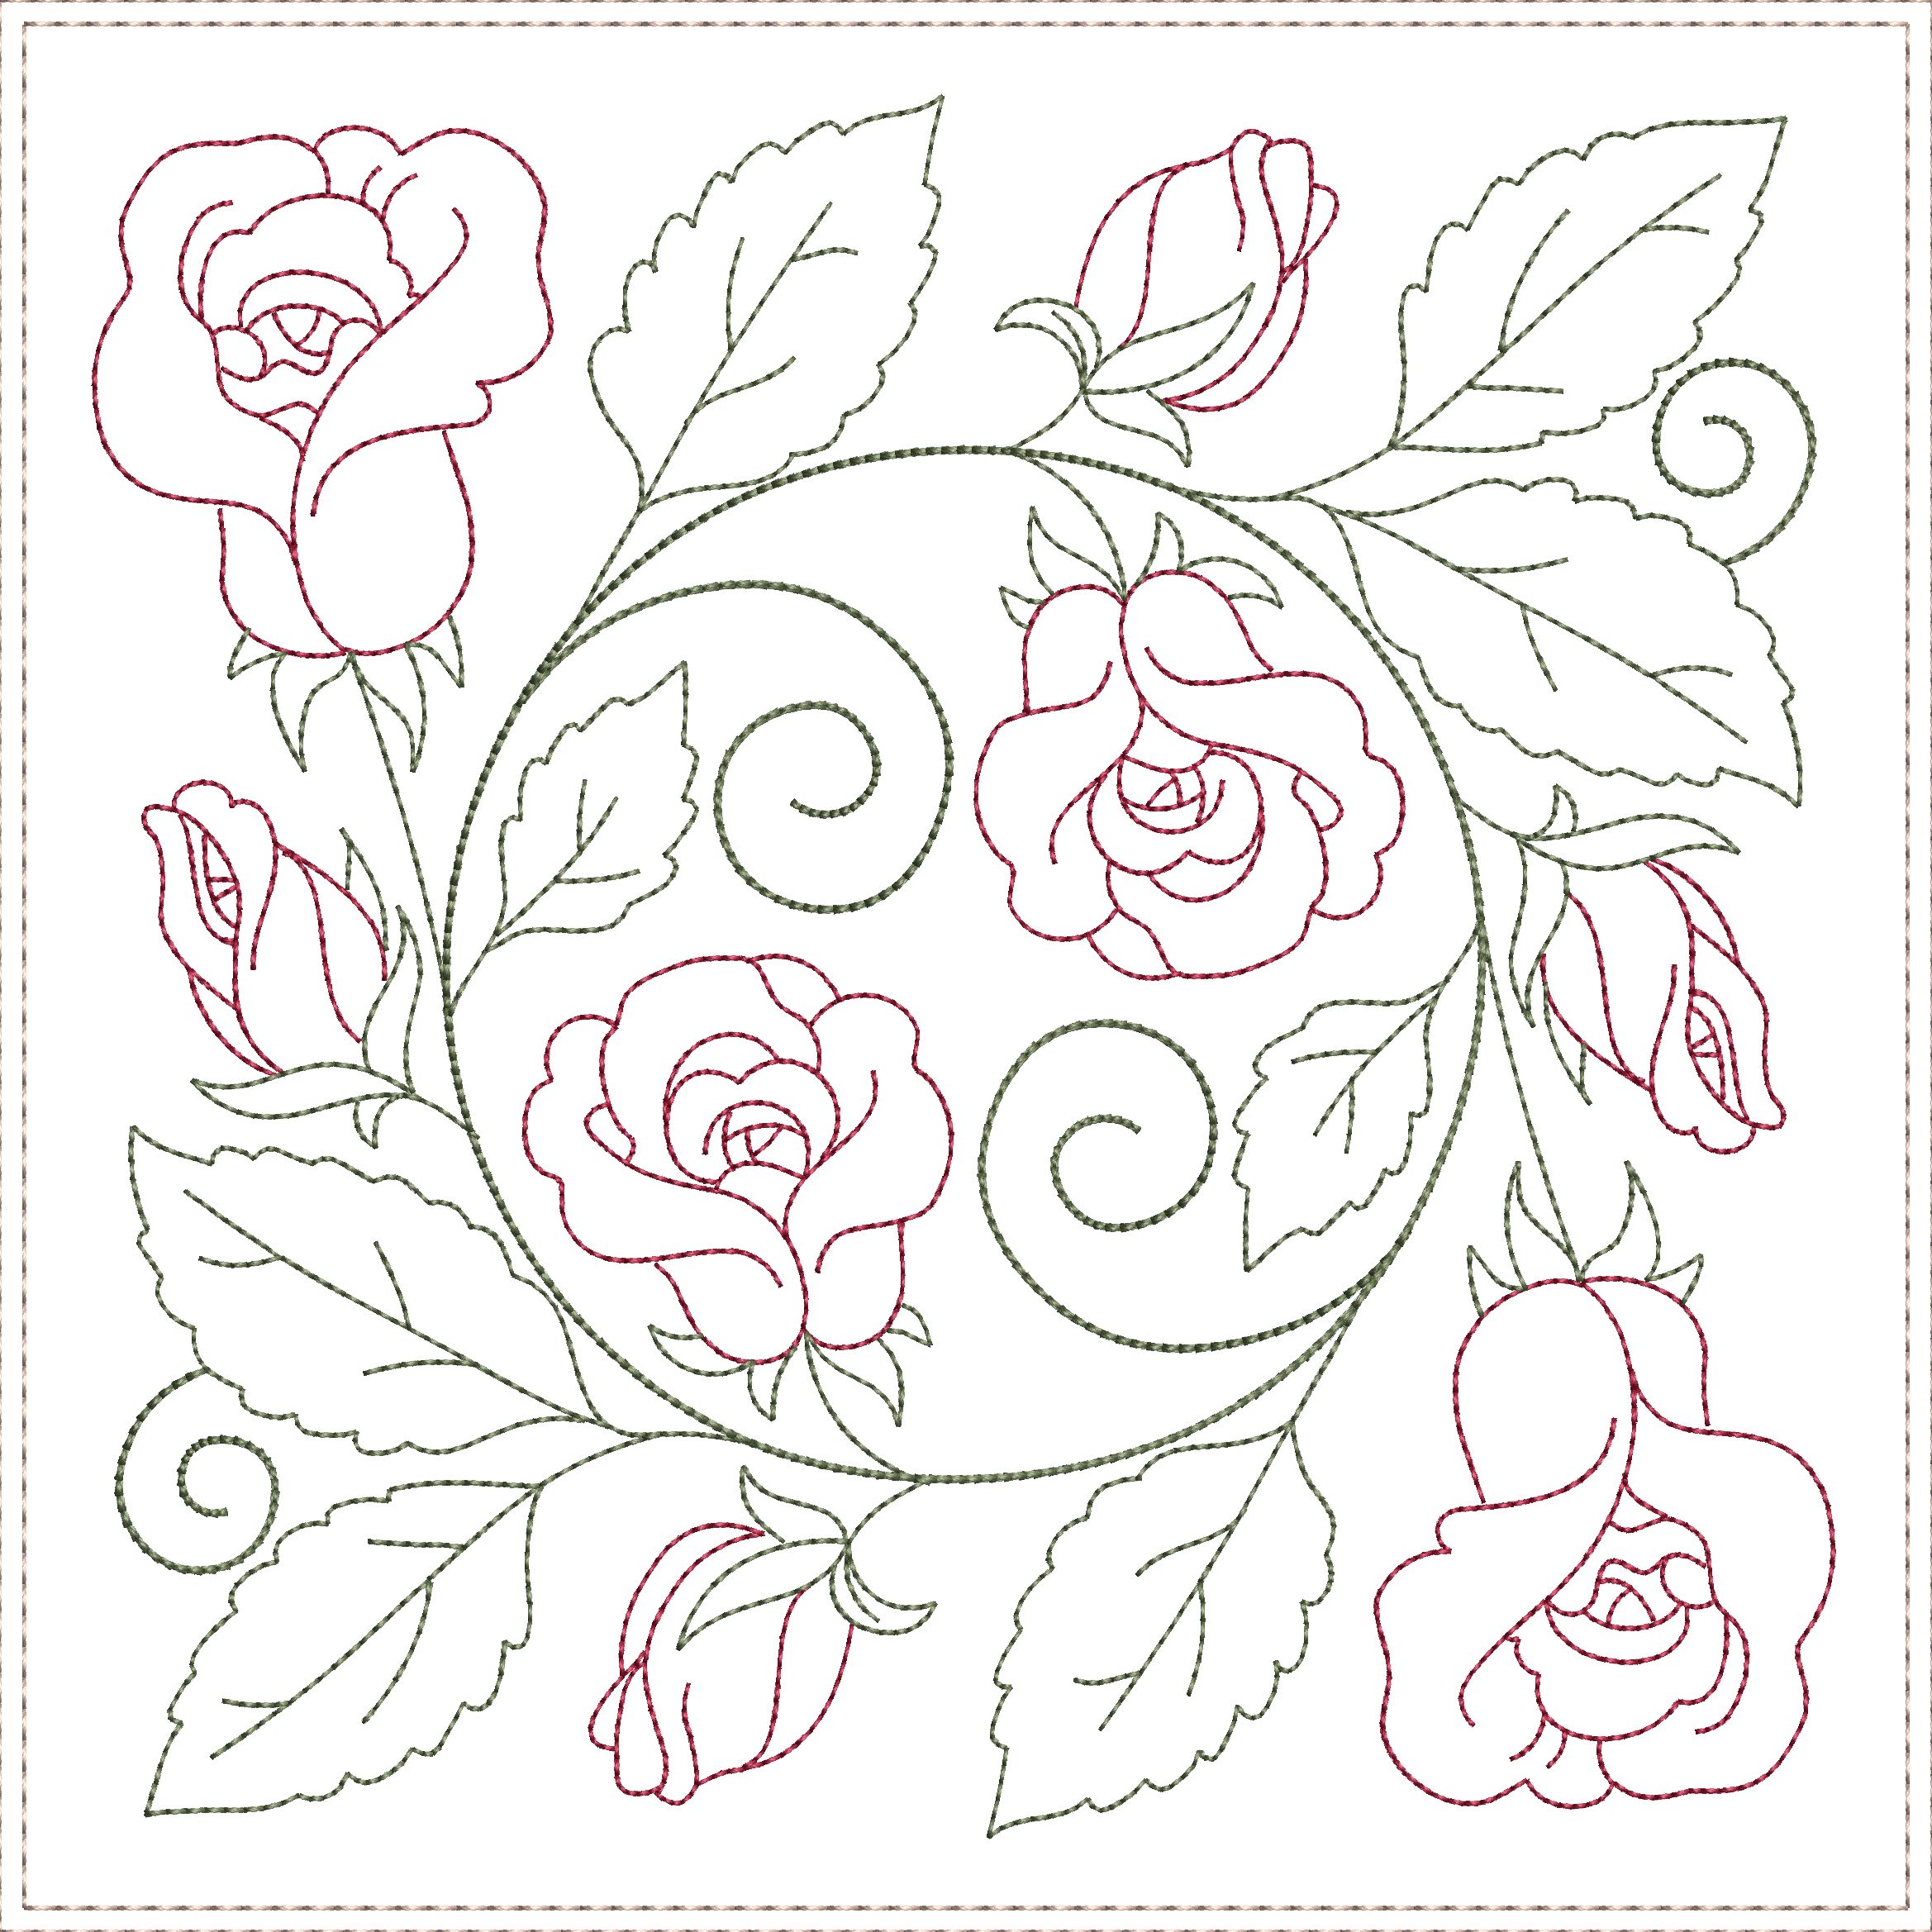 Circle of Roses-12